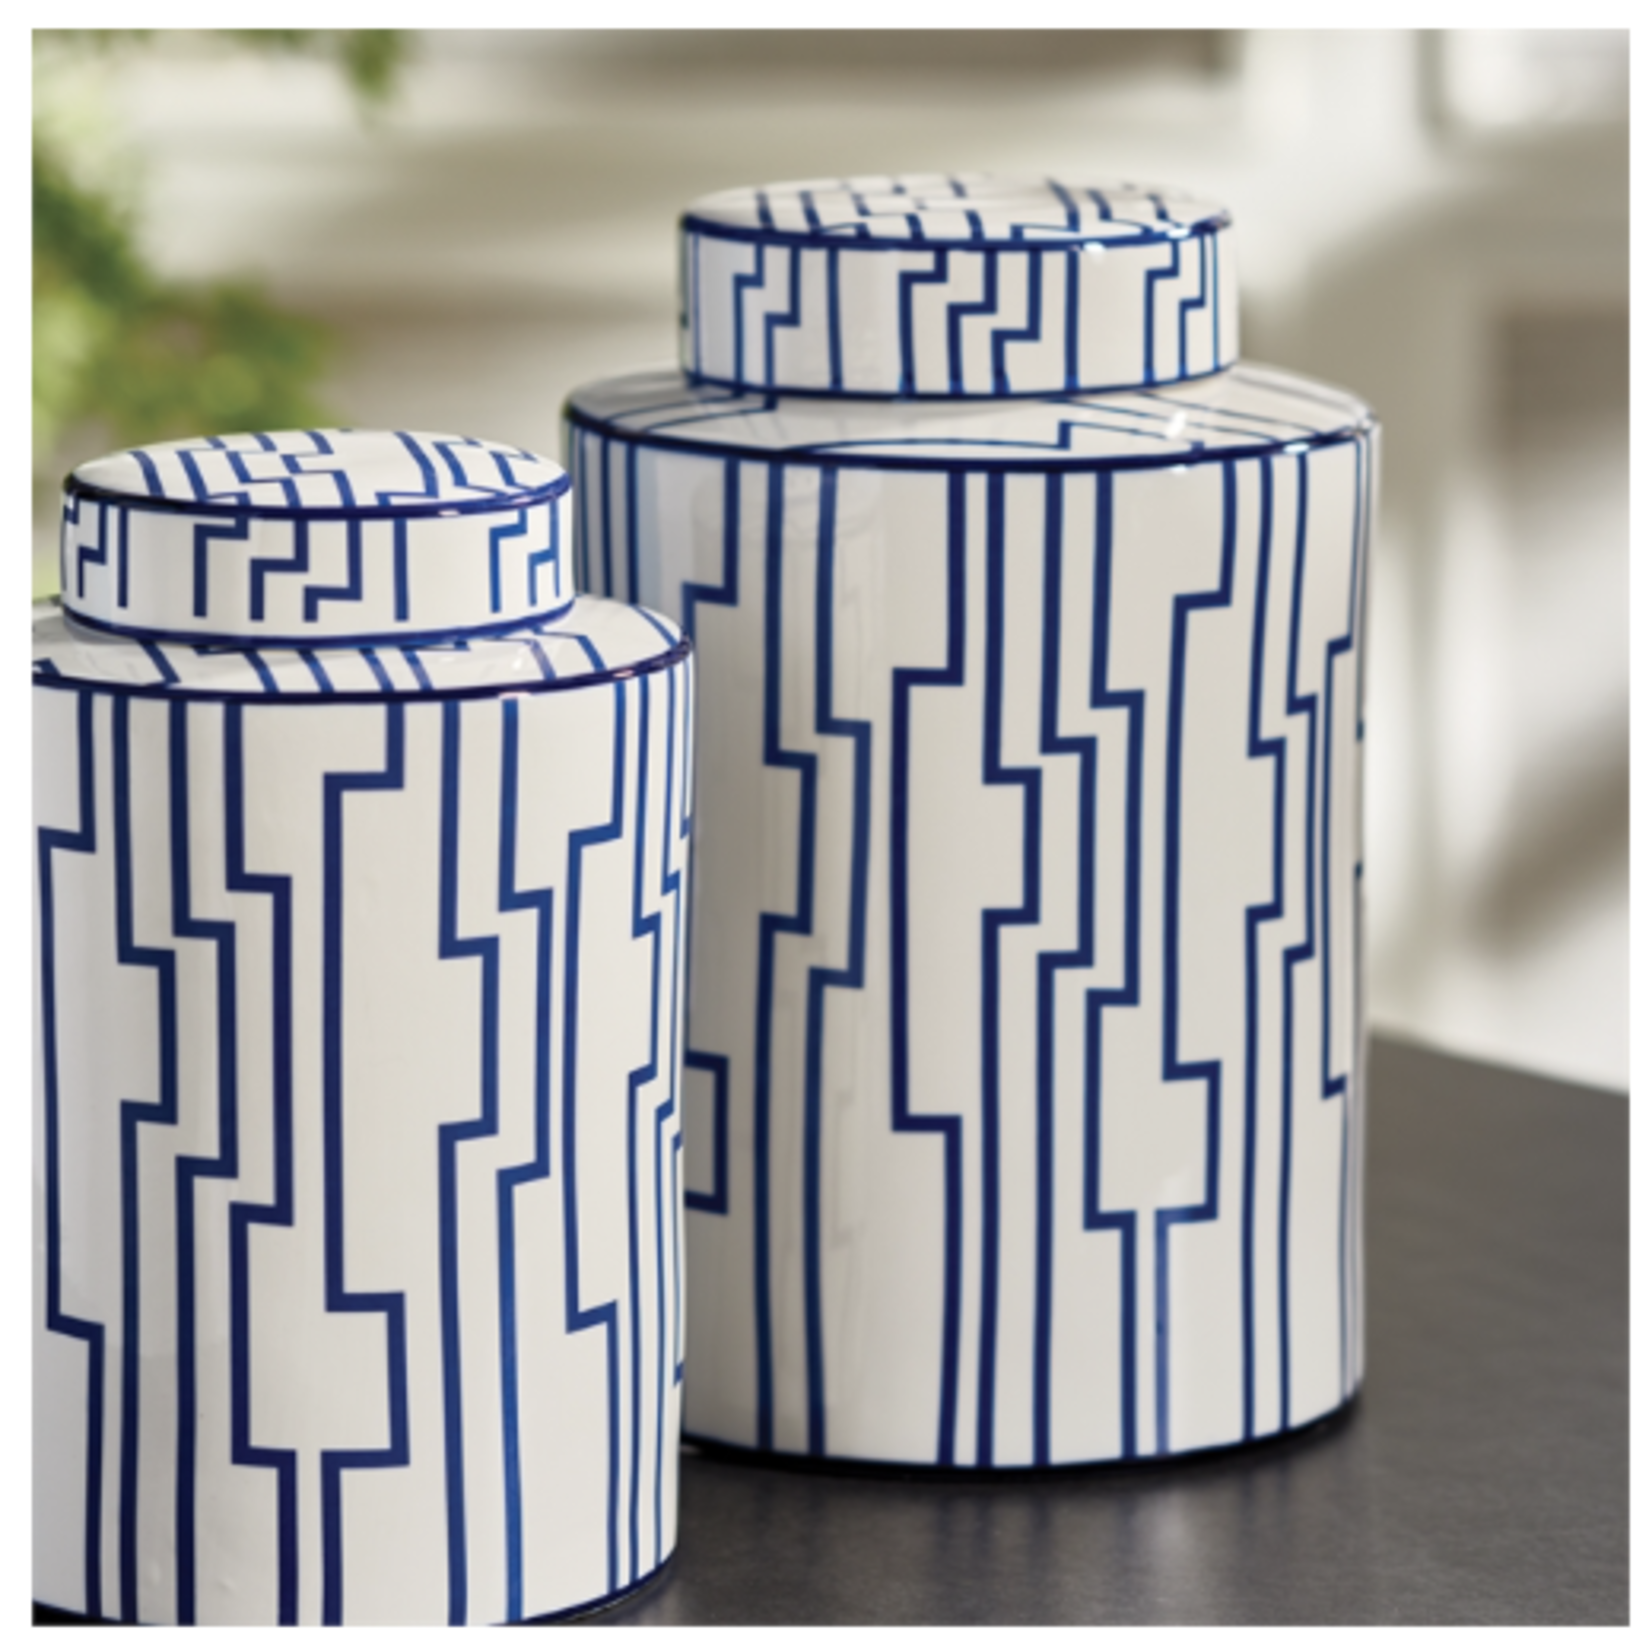 Outside The Box 10" Barclay Butera White & Blue Labyrinth Ceramic Lidded Jar